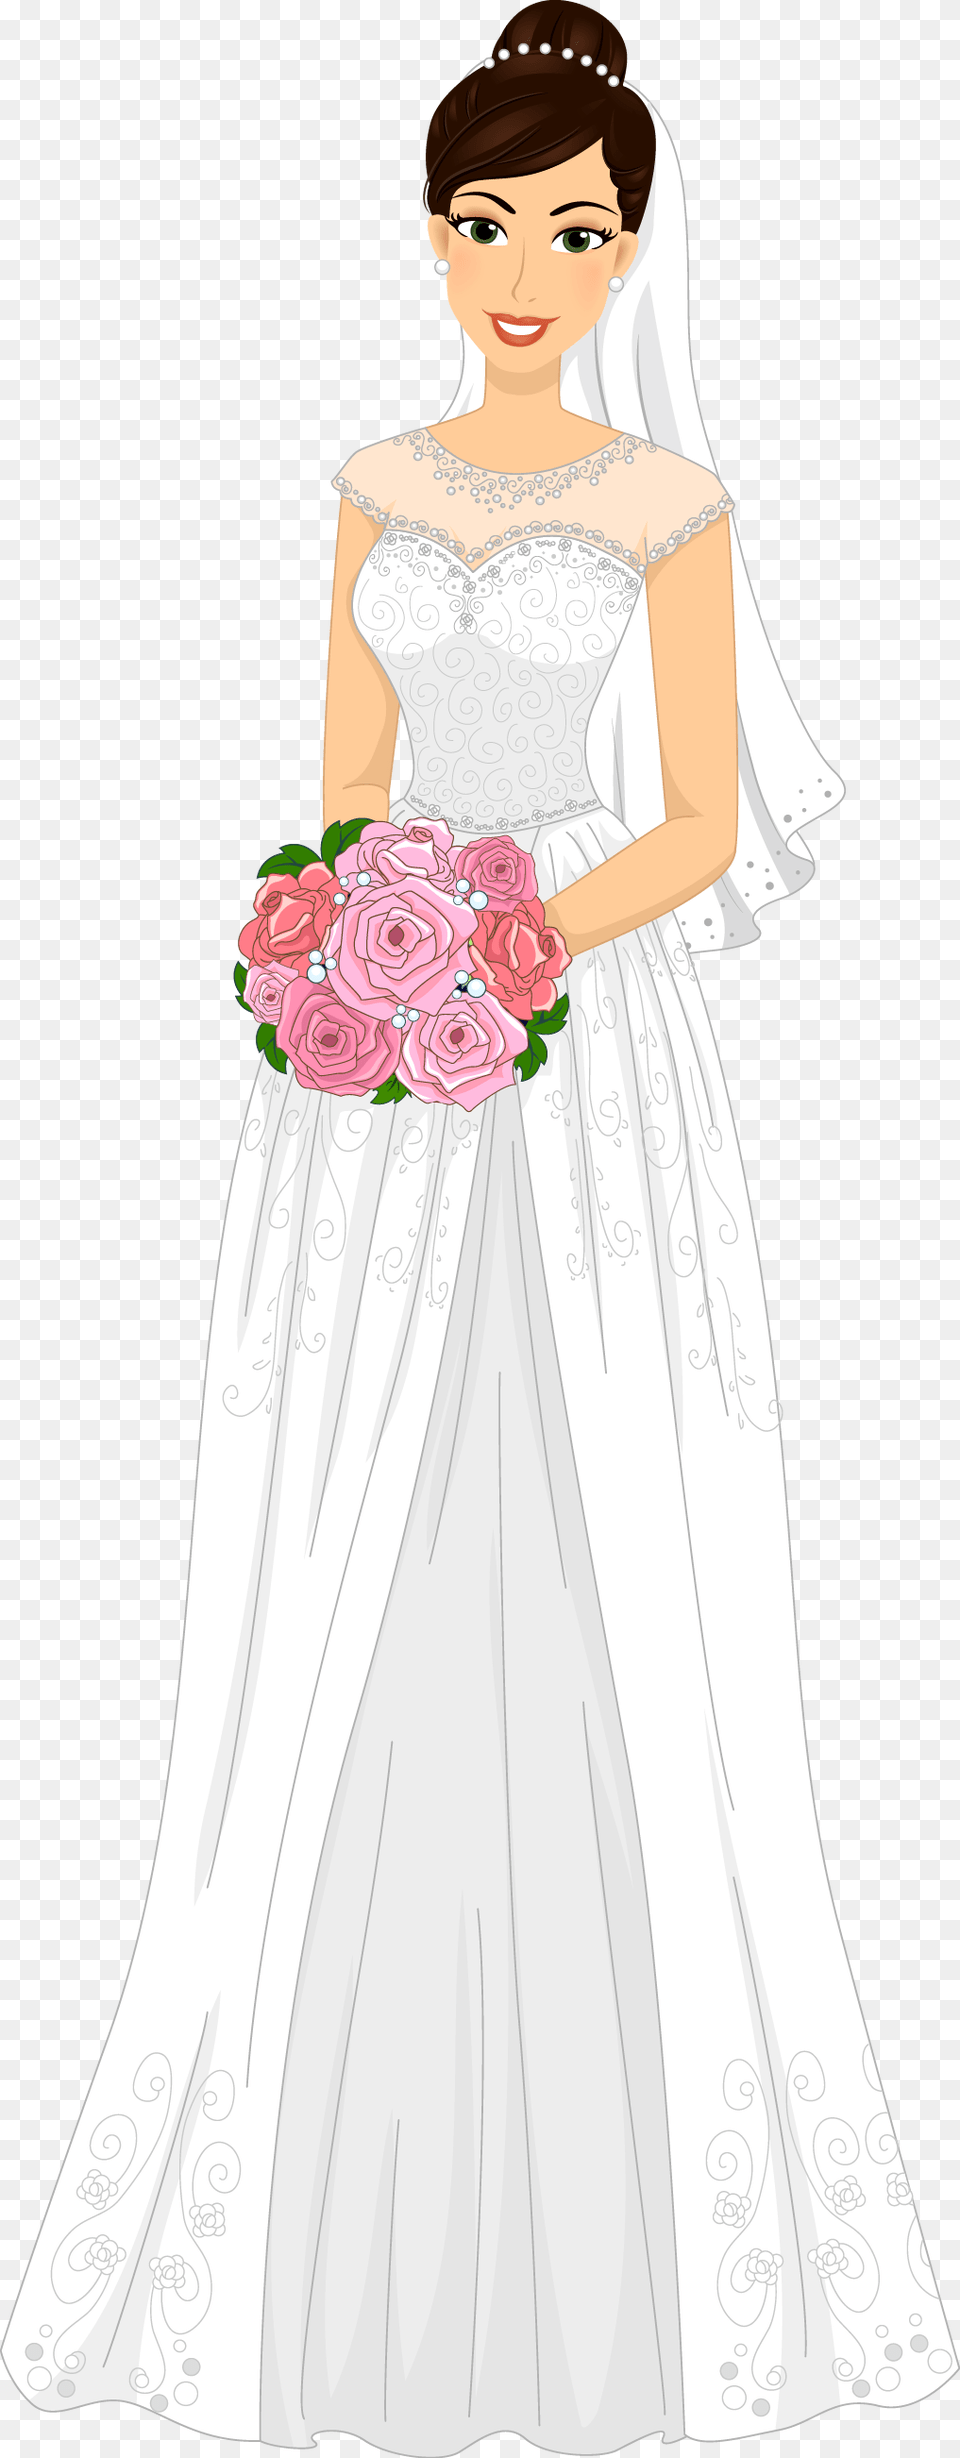 Bride Free Download Portable Network Graphics, Flower Bouquet, Formal Wear, Flower Arrangement, Flower Png Image